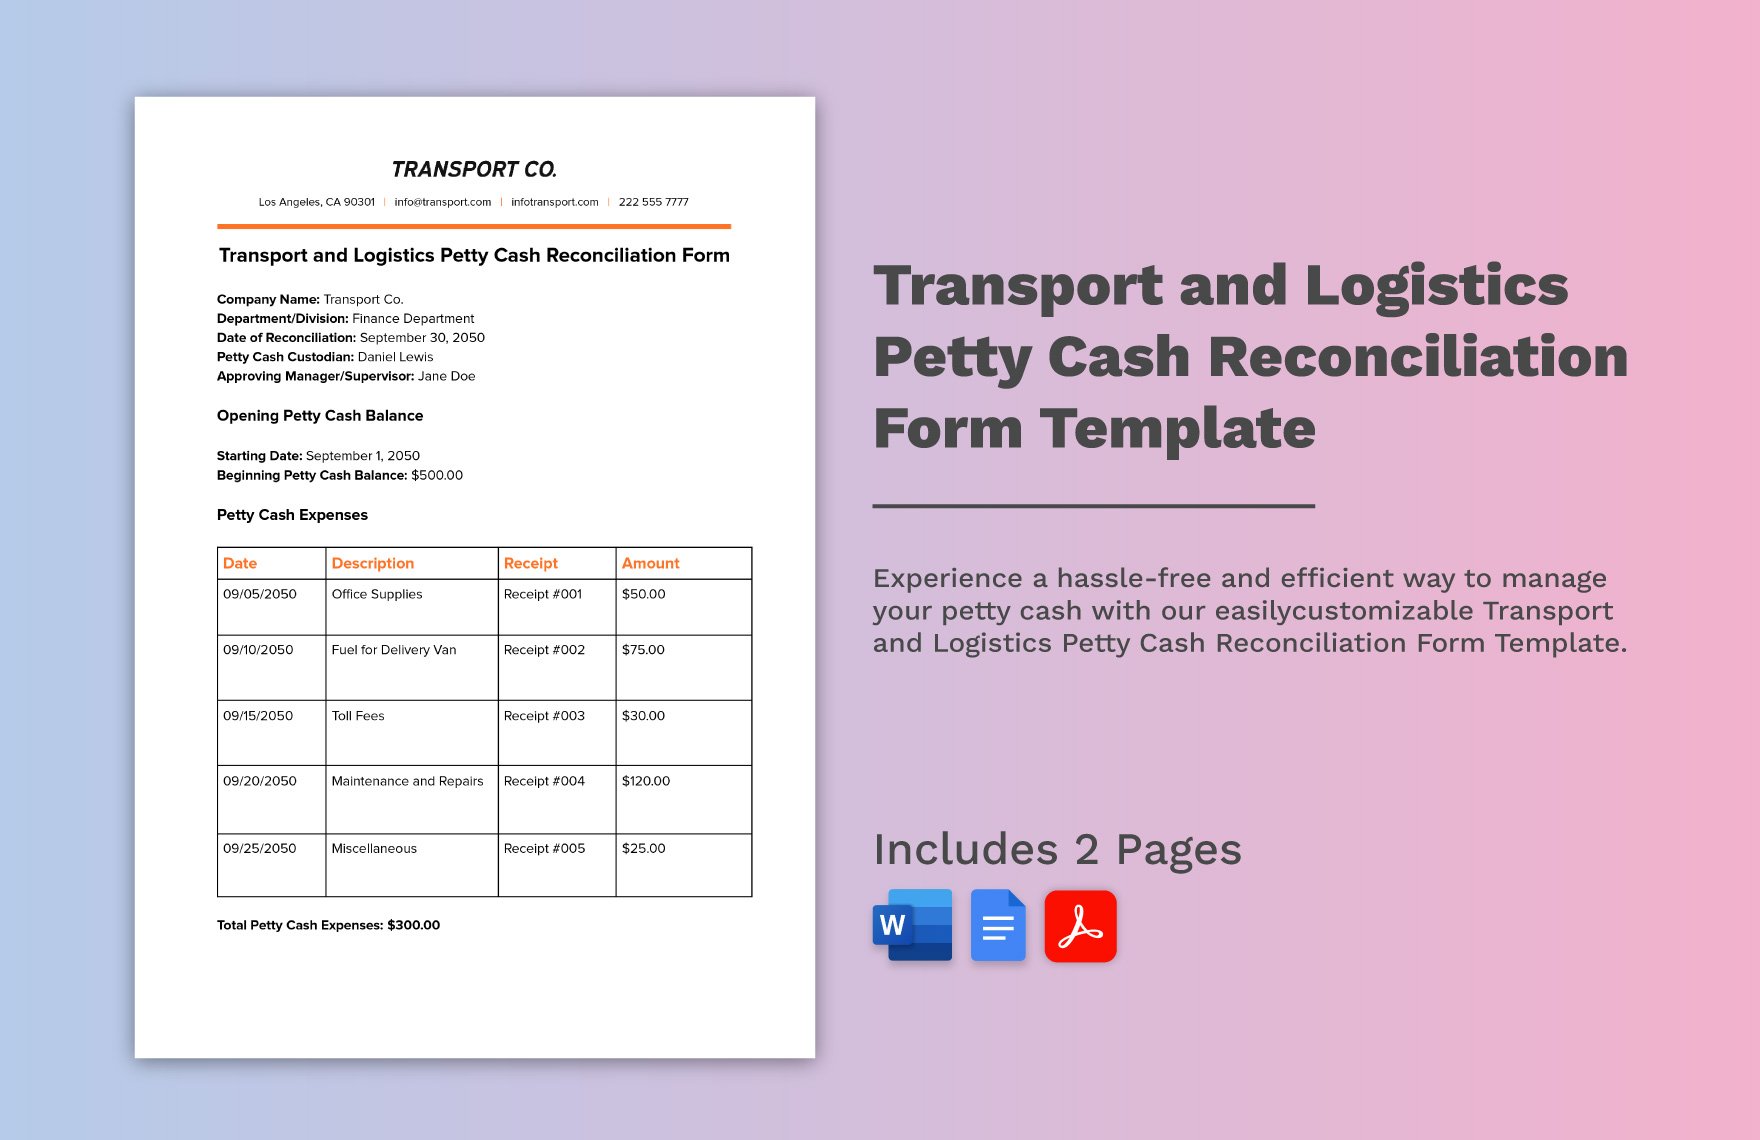 Transport and Logistics Petty Cash Reconciliation Form Template